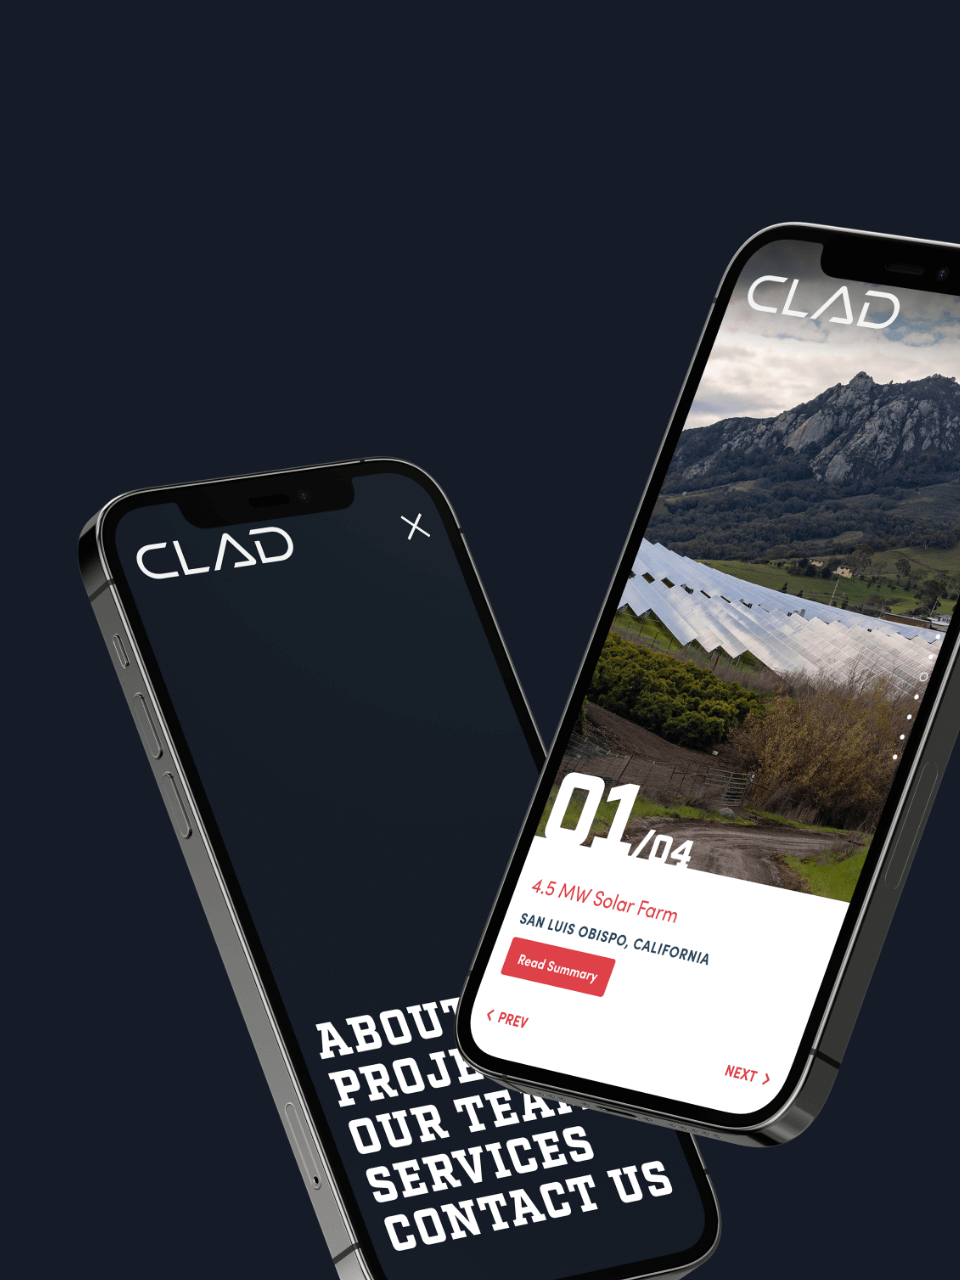 CLAD website displayed on mobile phone